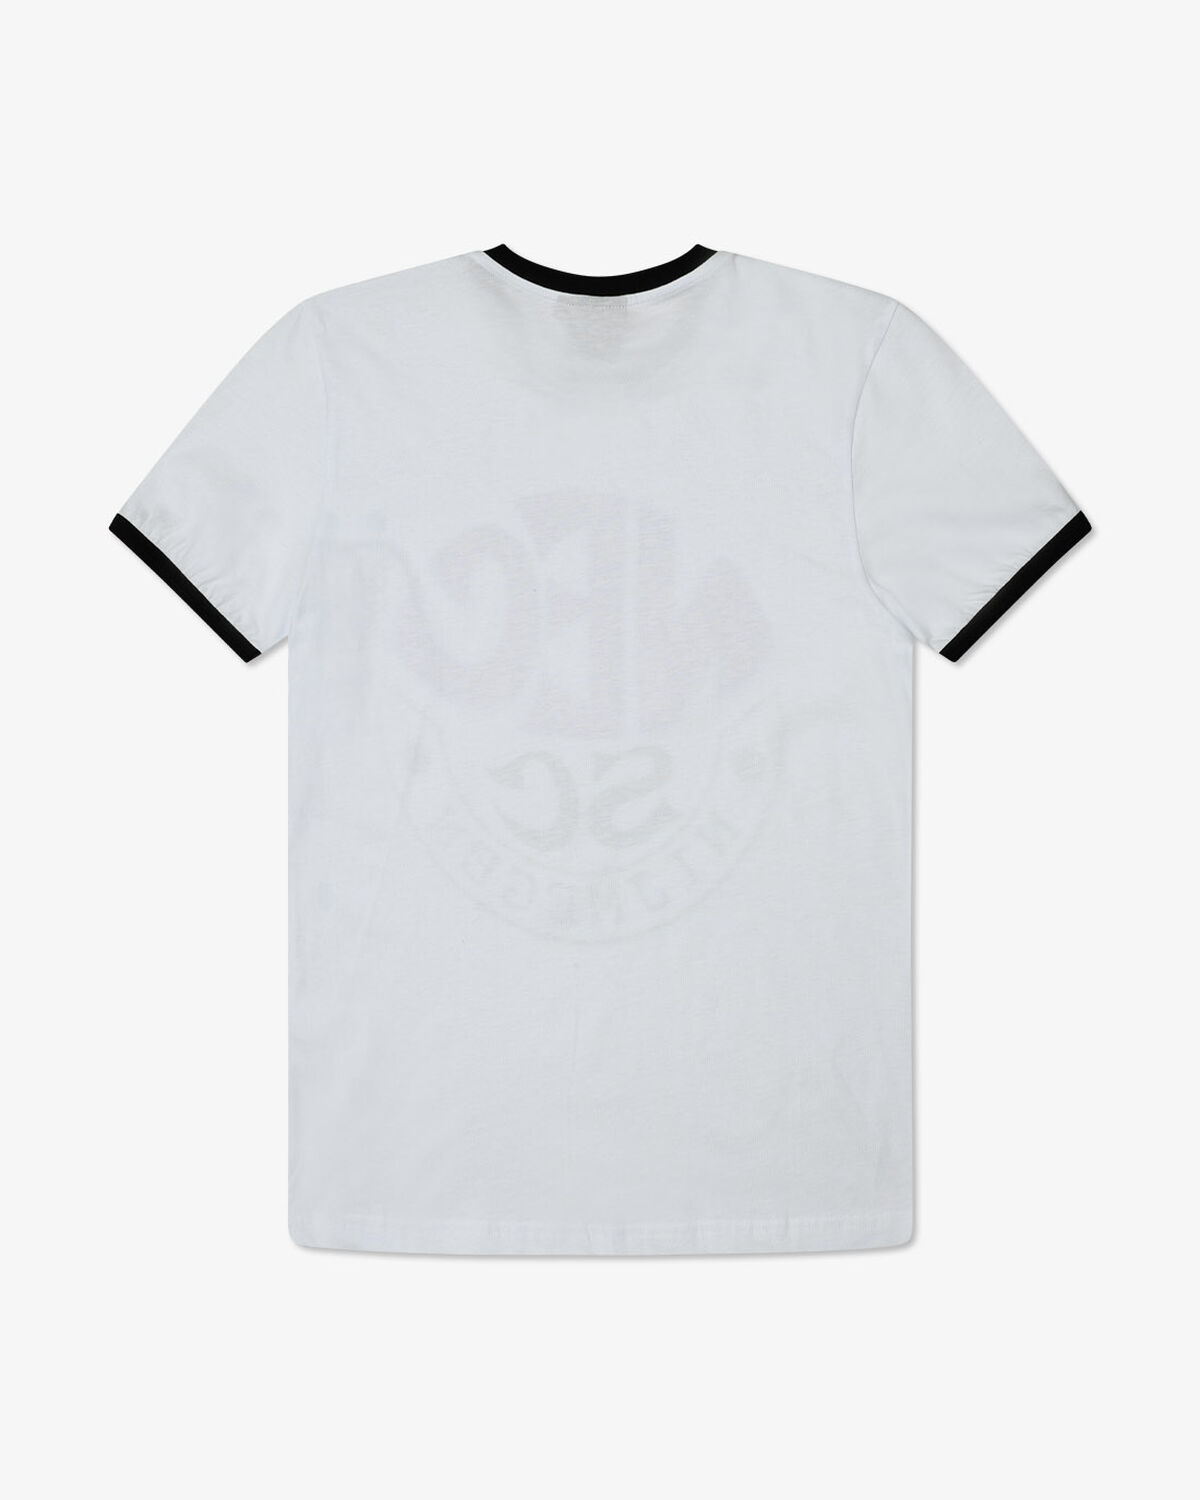 N.E.C. Retro Shirt - Maatkeuze: S, Multitcolor, hi-res